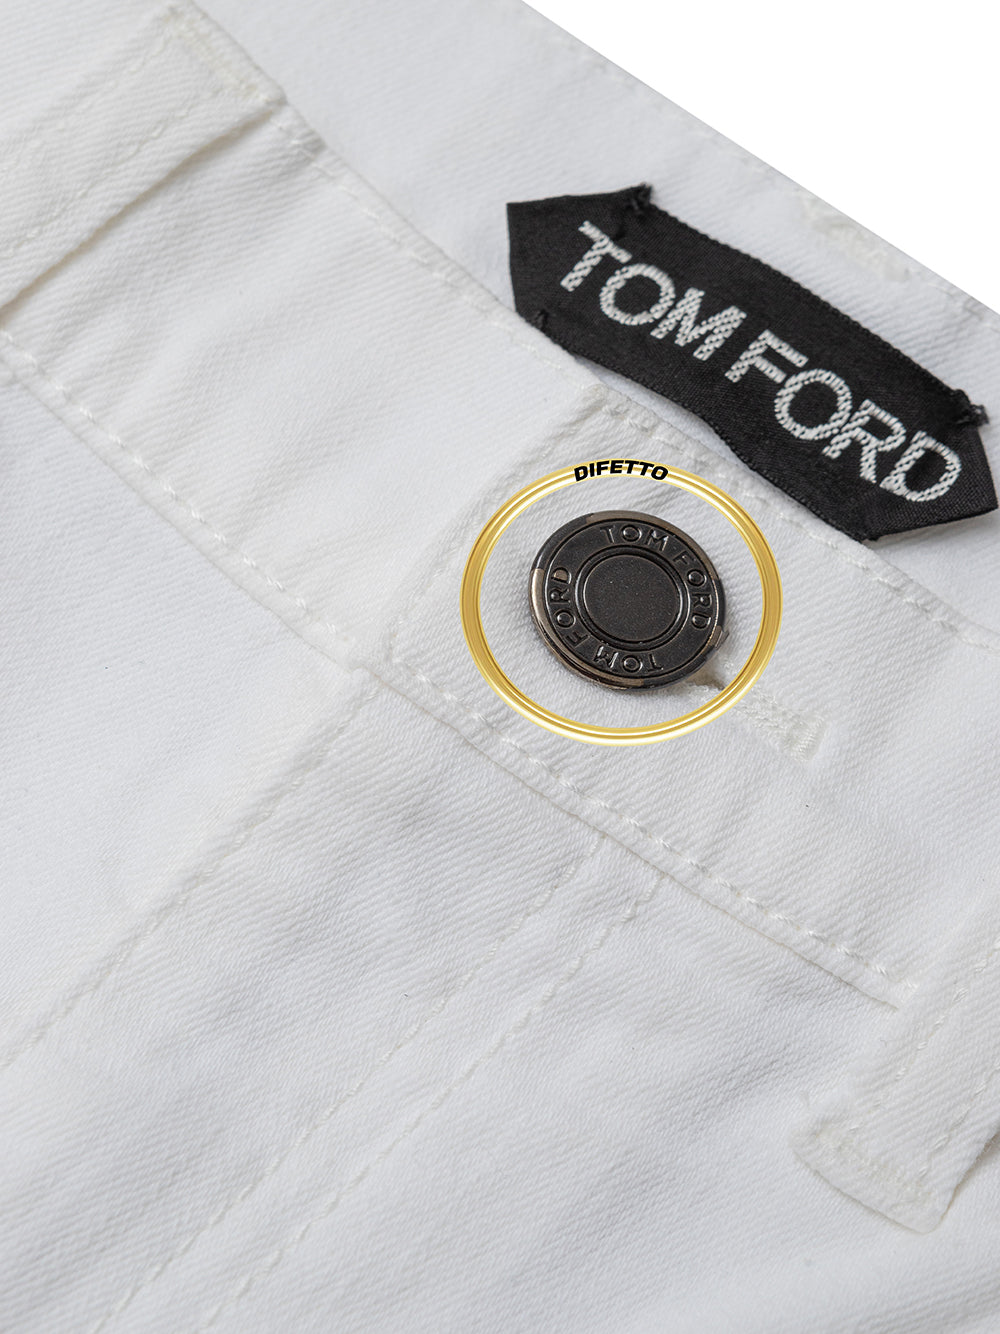 Jeans Skinny Bianco Tom Ford